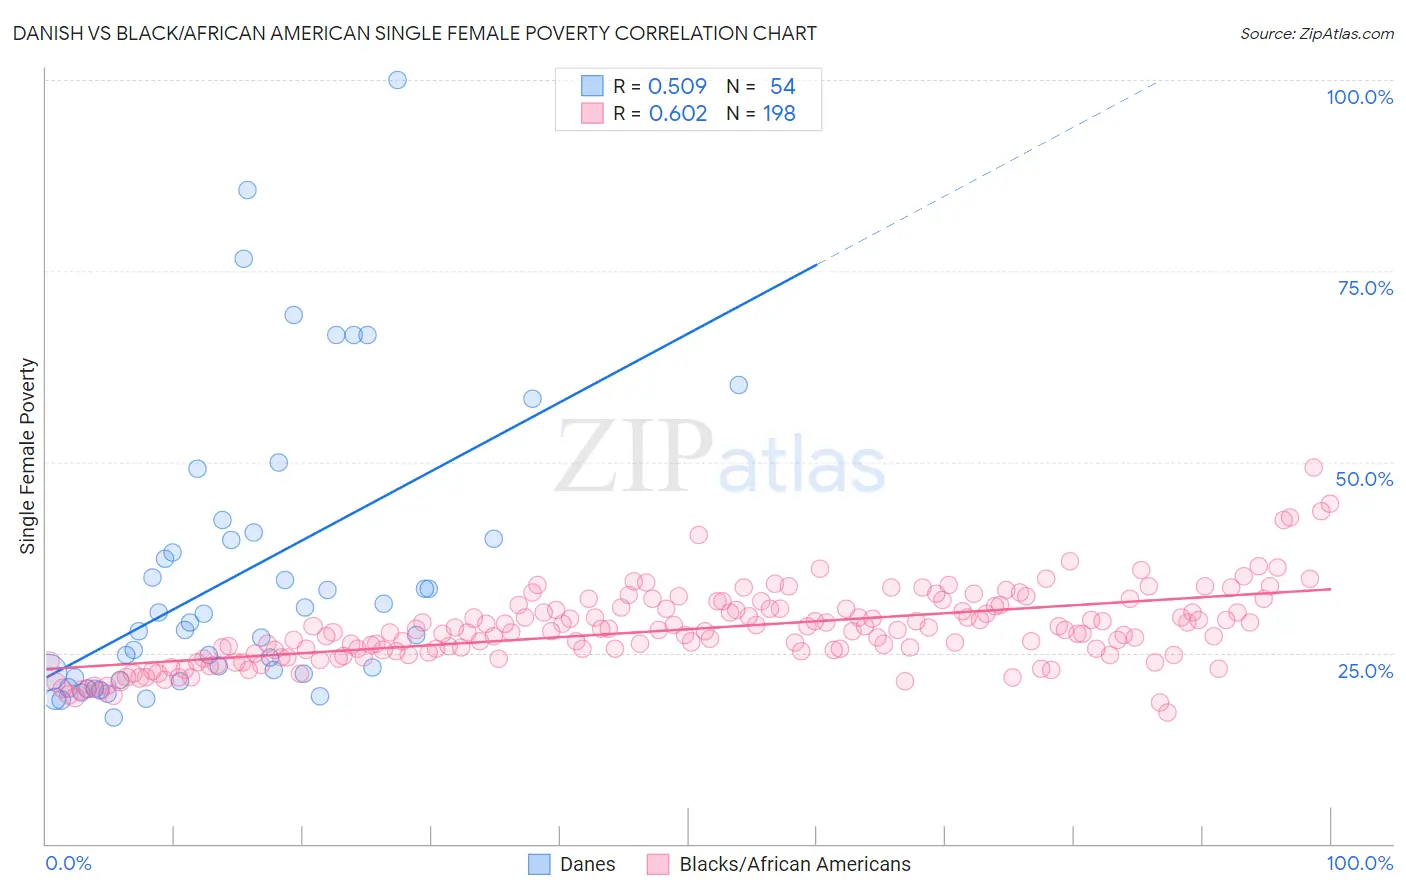 Danish vs Black/African American Single Female Poverty